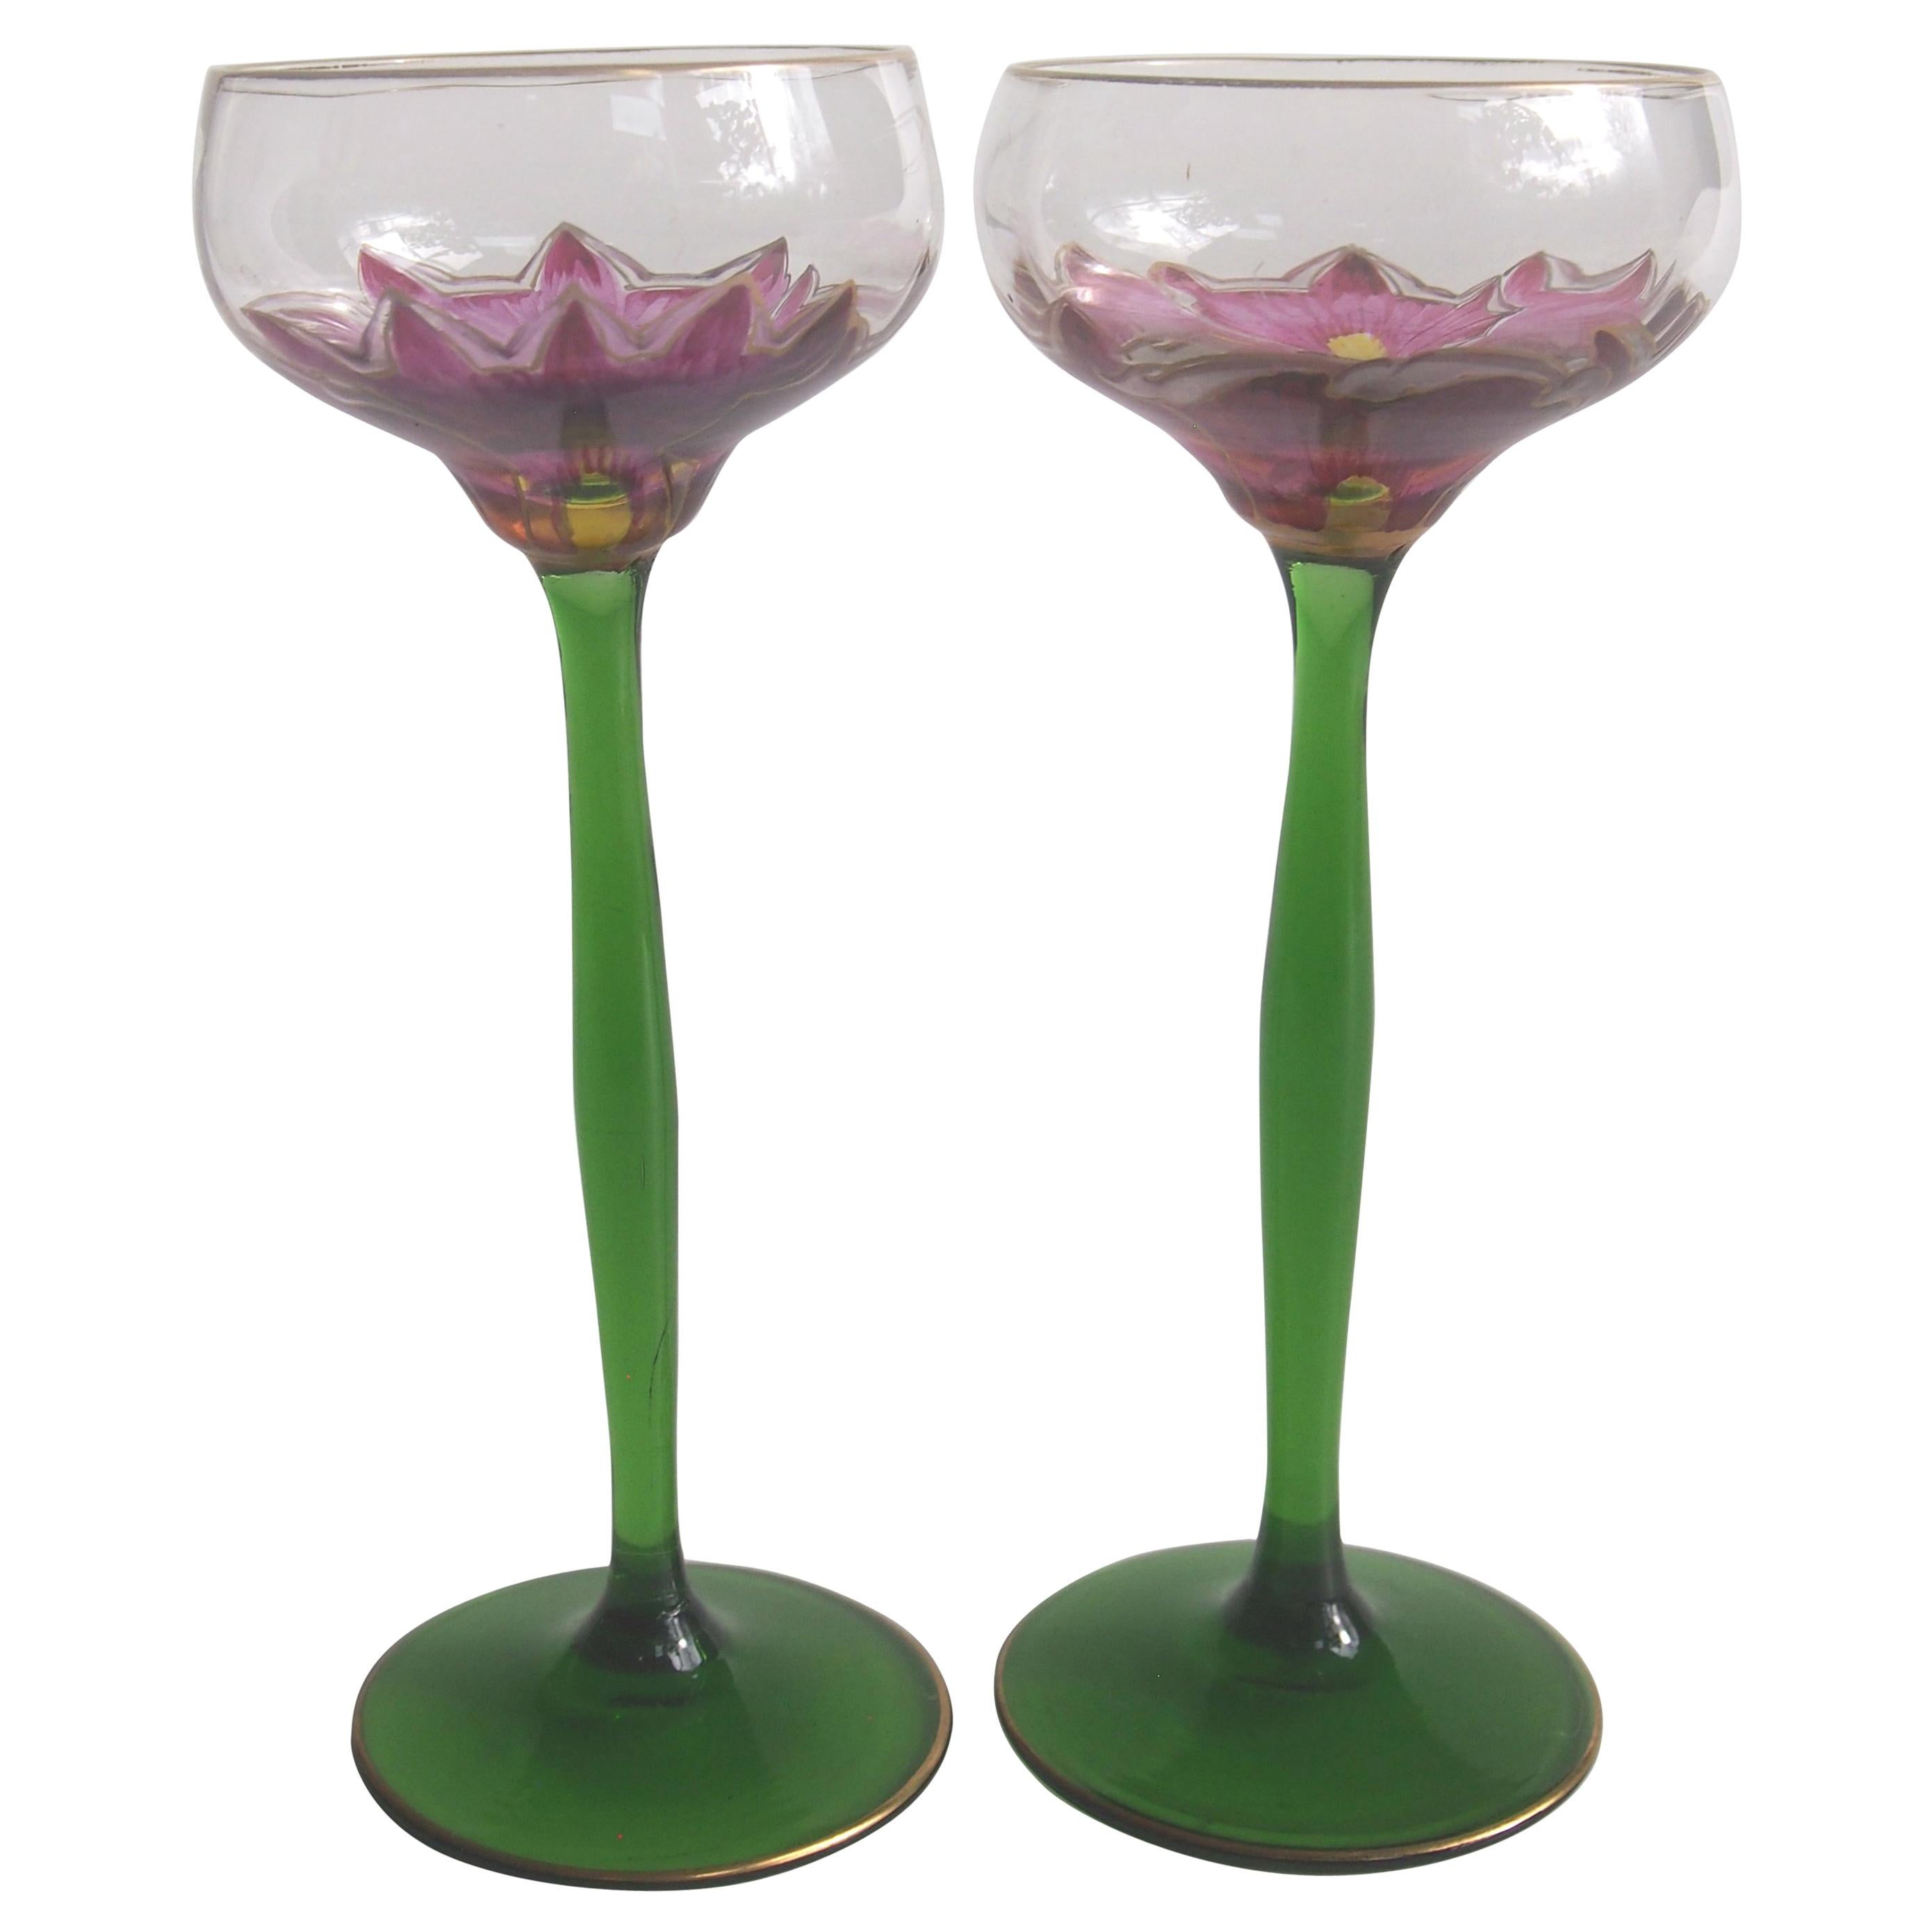 Bohemian Art Nouveau Pair of Small Meyr's Neffe Flower Glasses